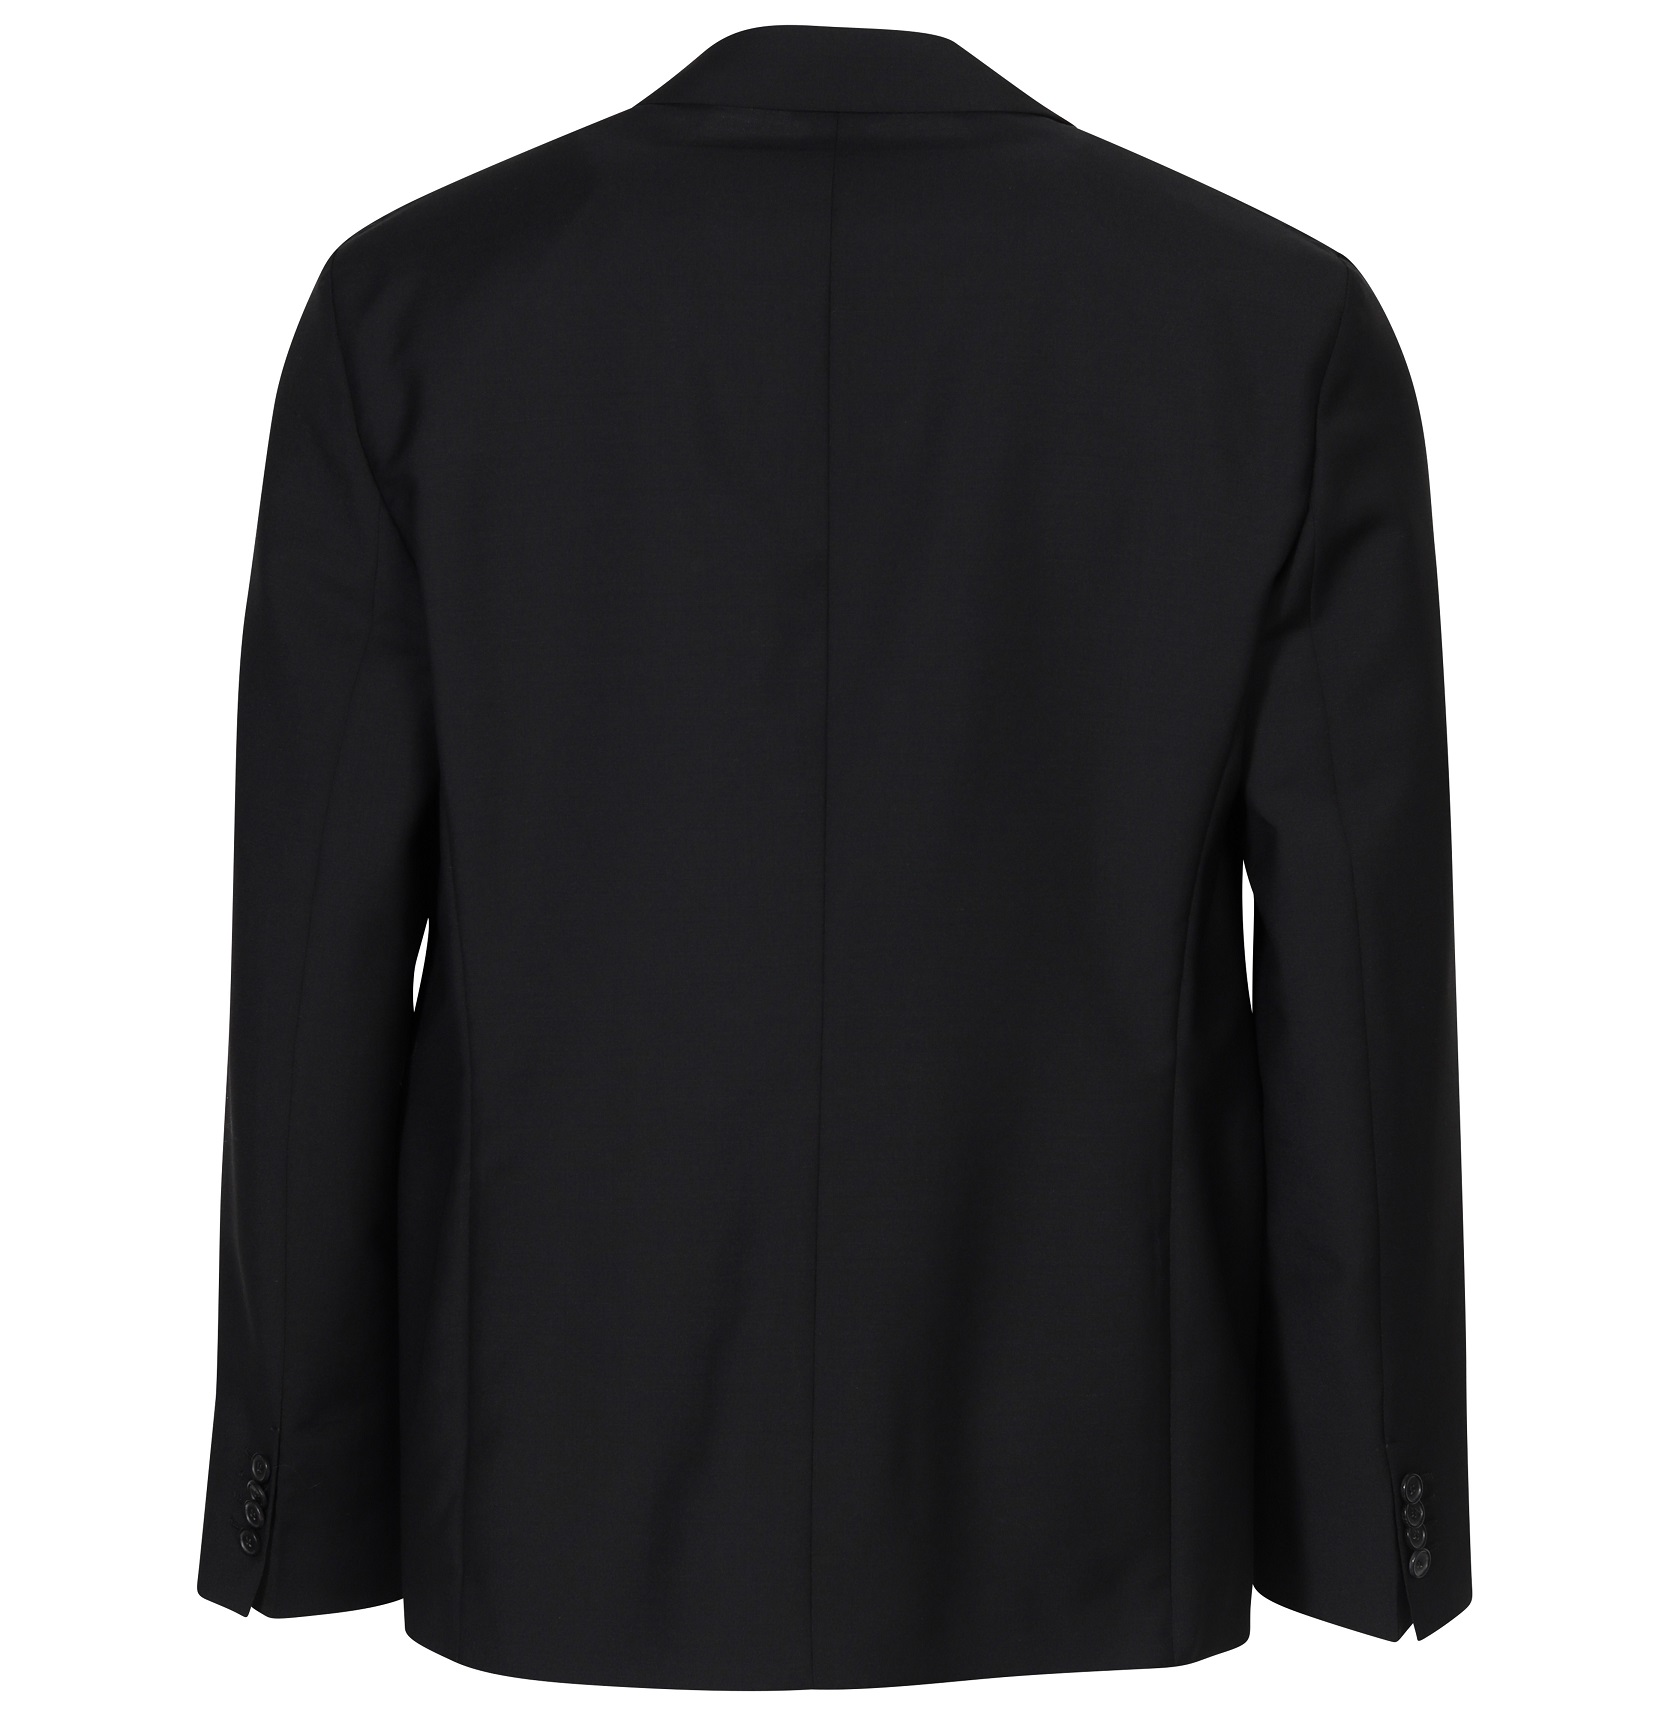 ACNE STUDIOS Suit Jacket in Black 52